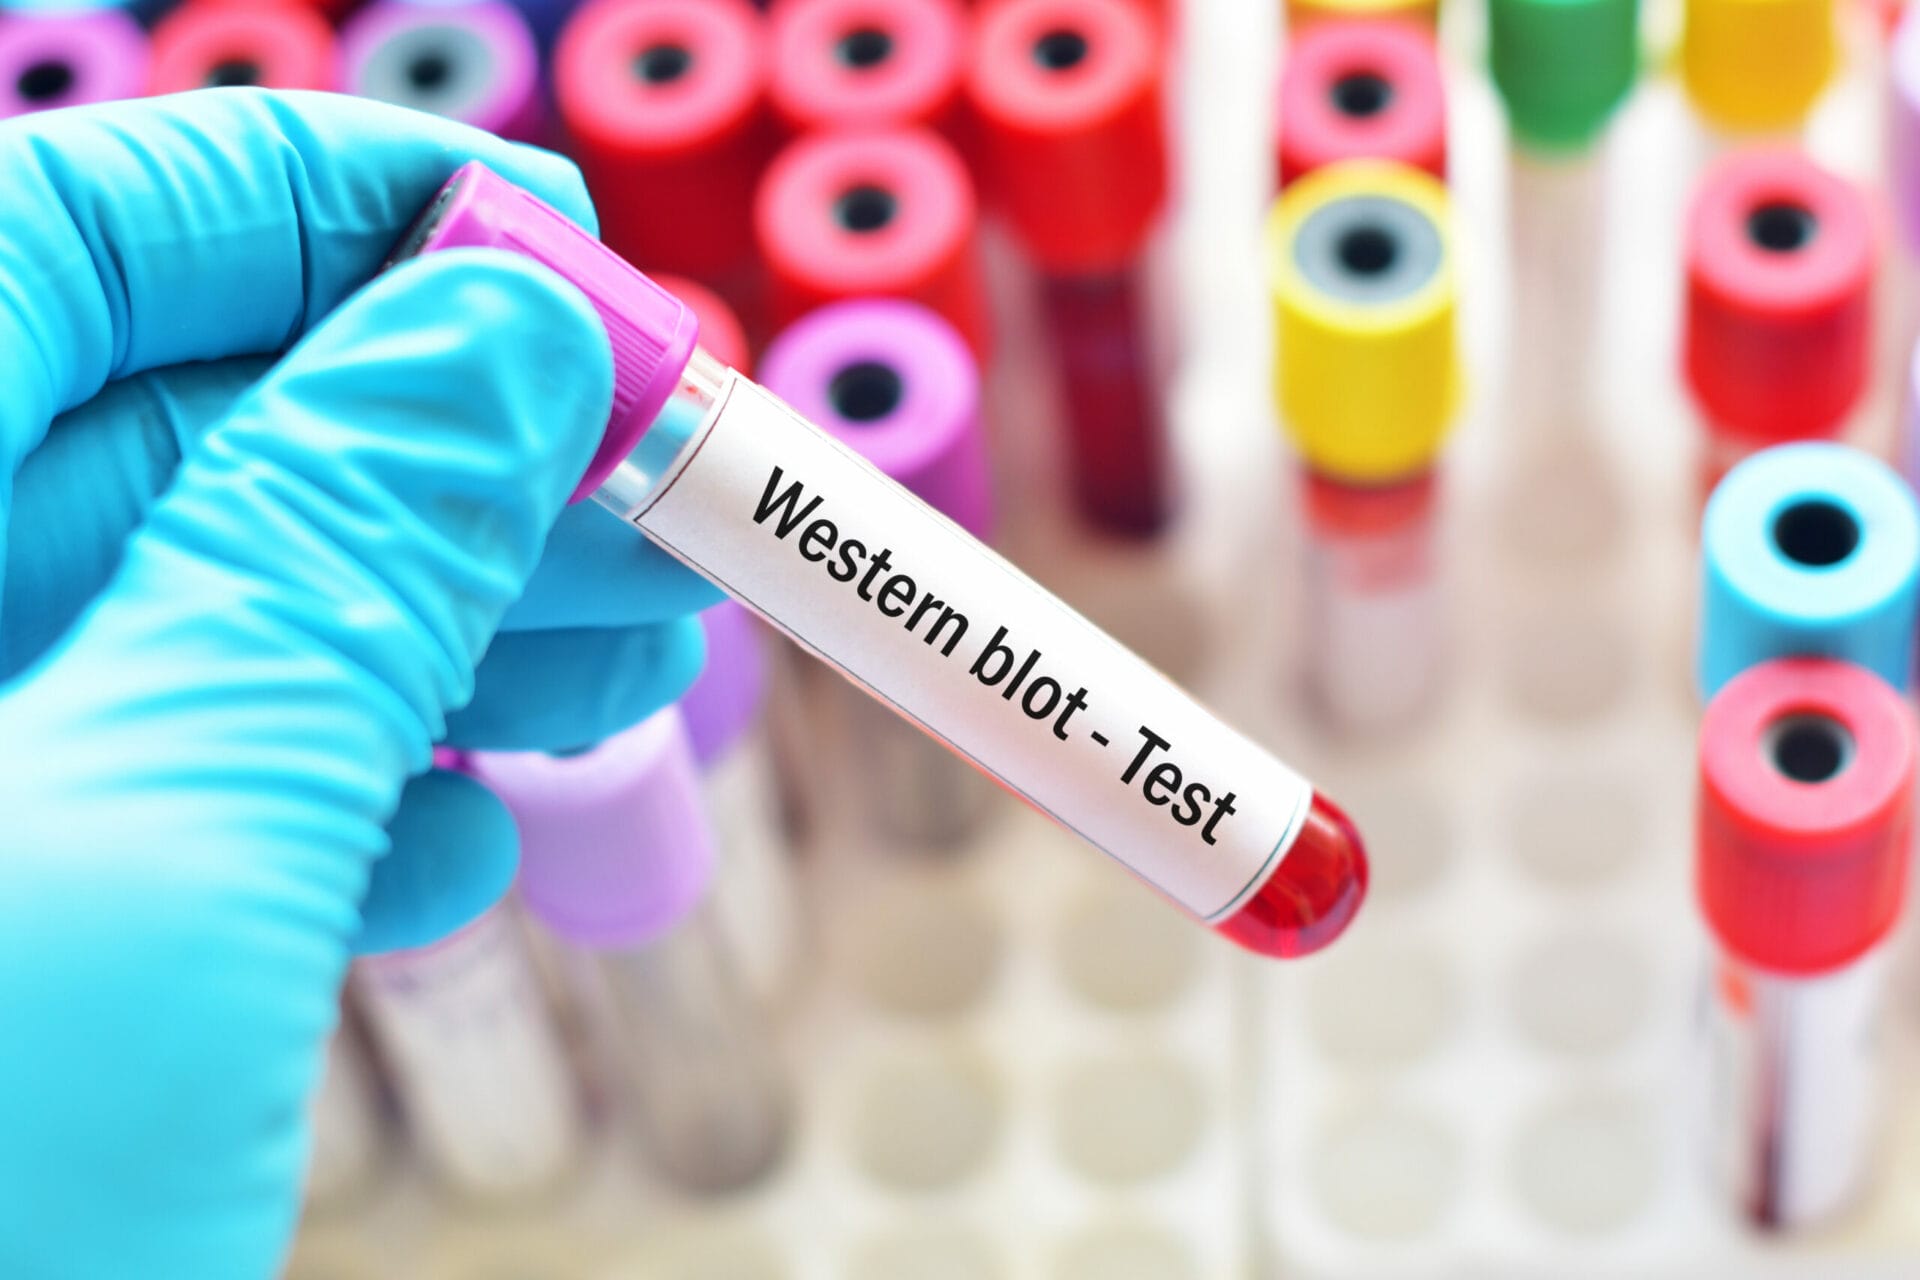 Western Blot for HIV Test In Chennai